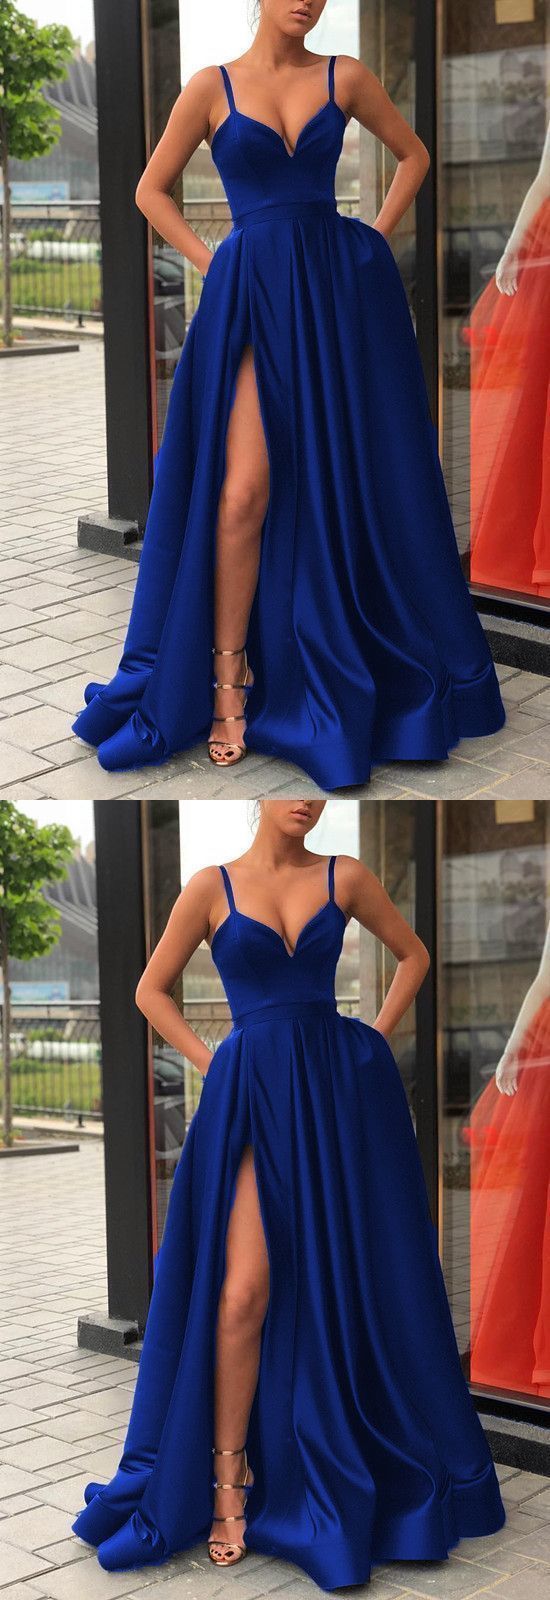 Royal Blue Prom Dress, Evening Dress, Dance Dresses, Graduation School Party Gown